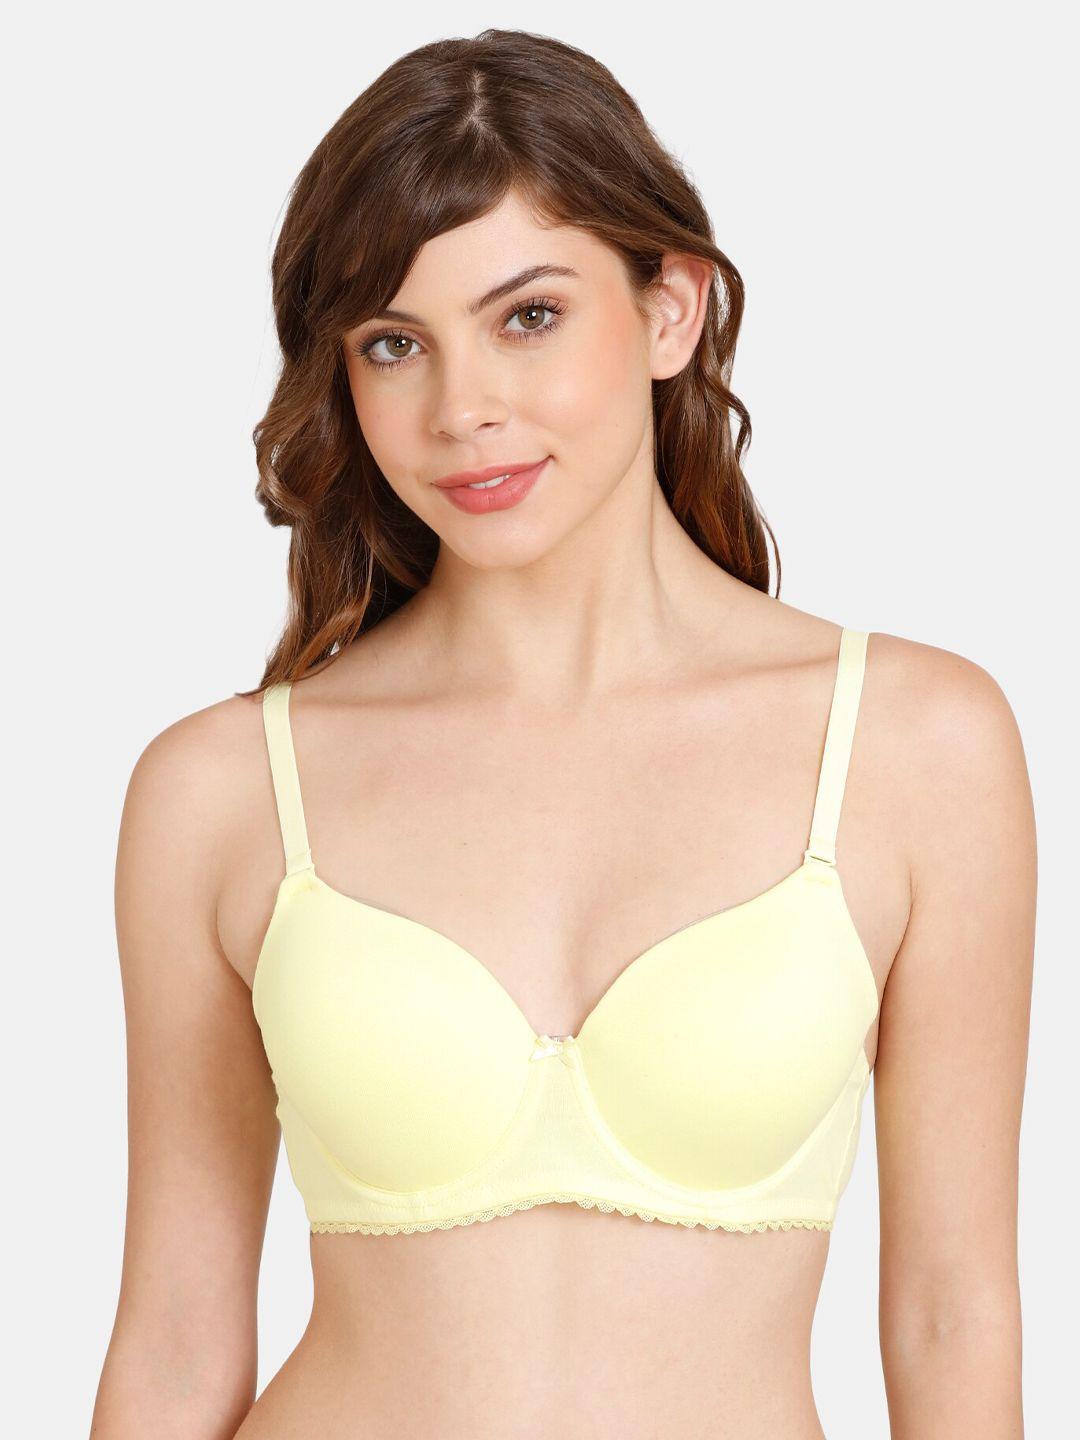 rosaline-by-zivame-yellow-bra-underwired-lightly-padded